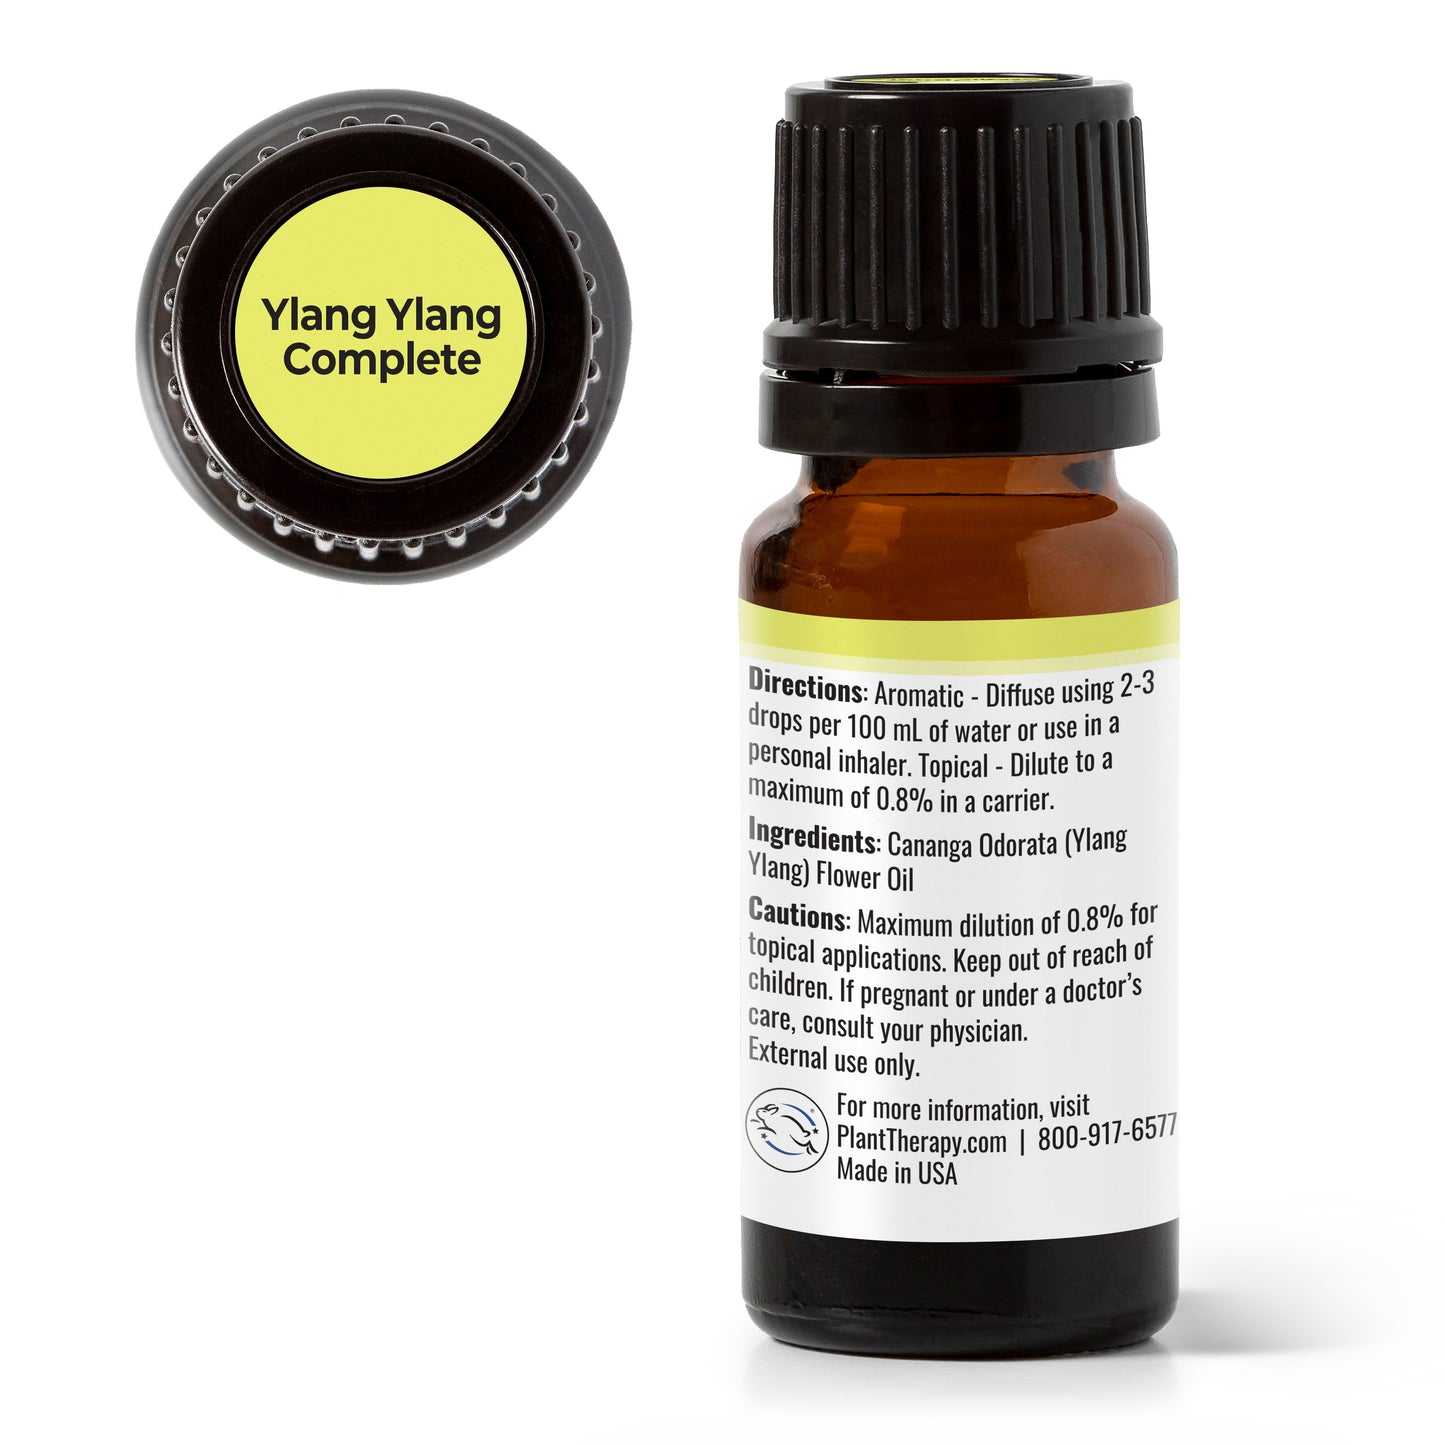 Ylang Ylang Complete Essential Oil back label